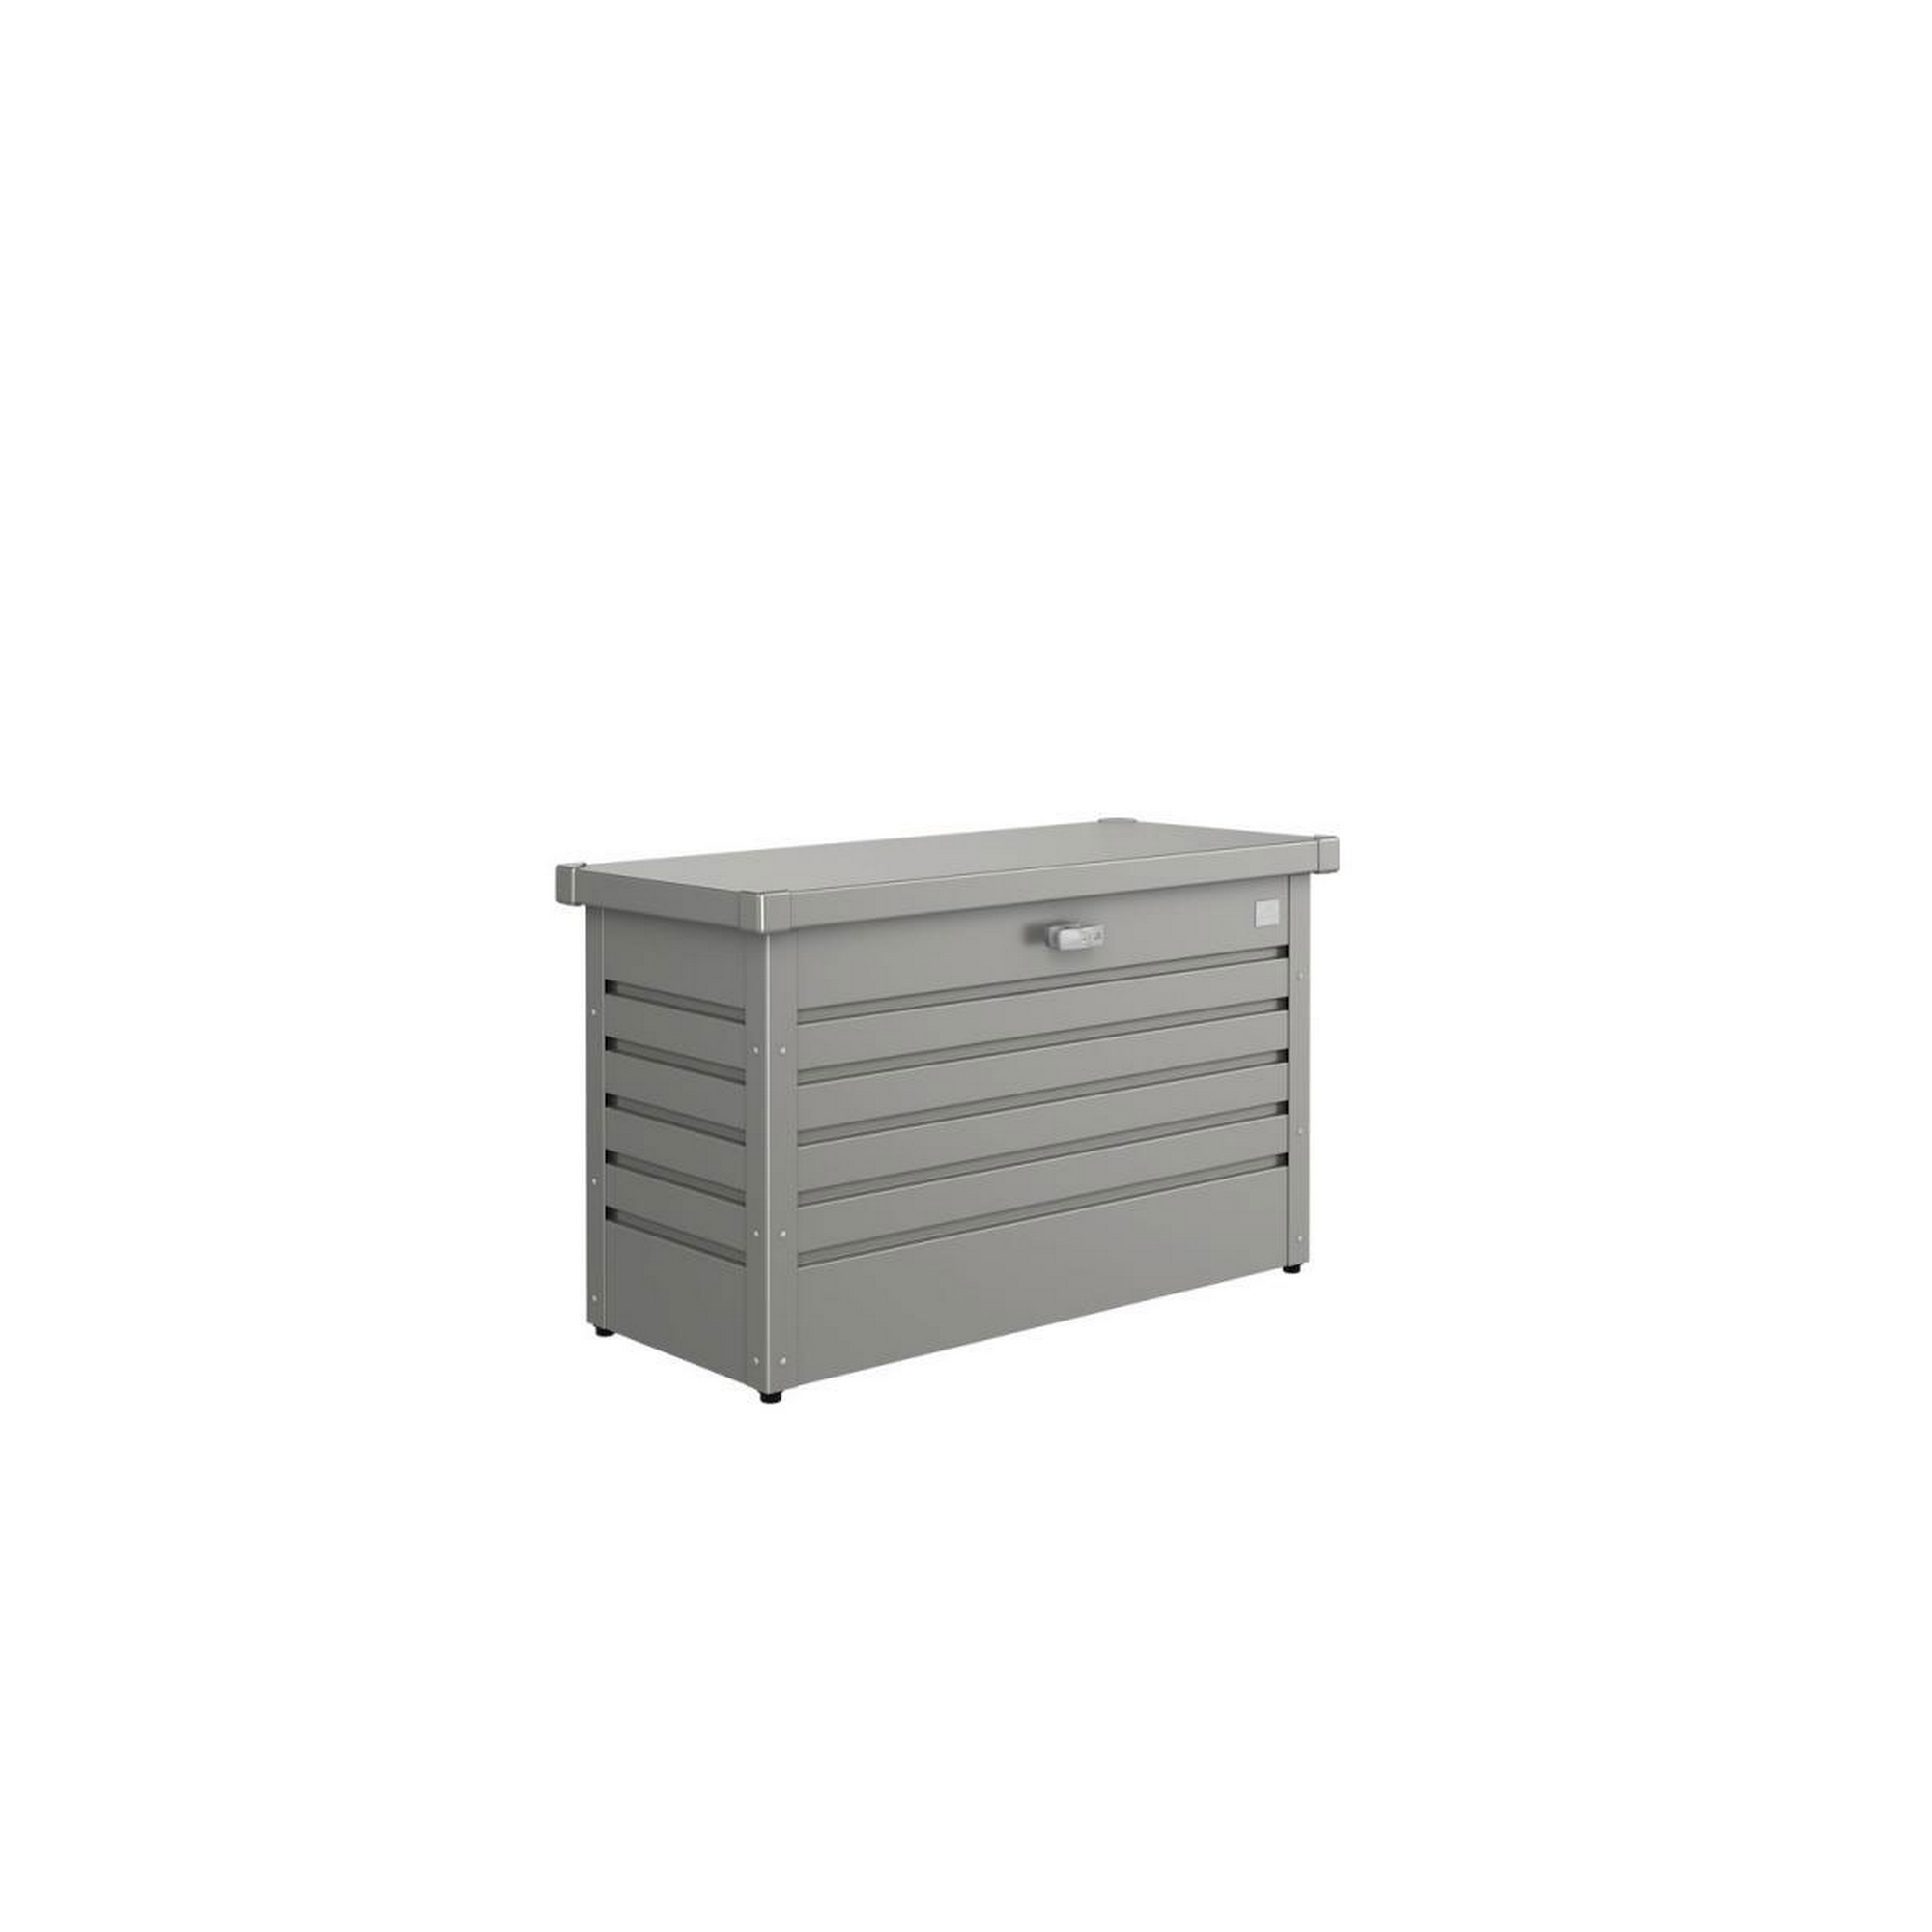 Aufbewahrungsbox 'FreizeitBox 100' quarzgrau metallic 101 x 46 x 61 cm + product picture